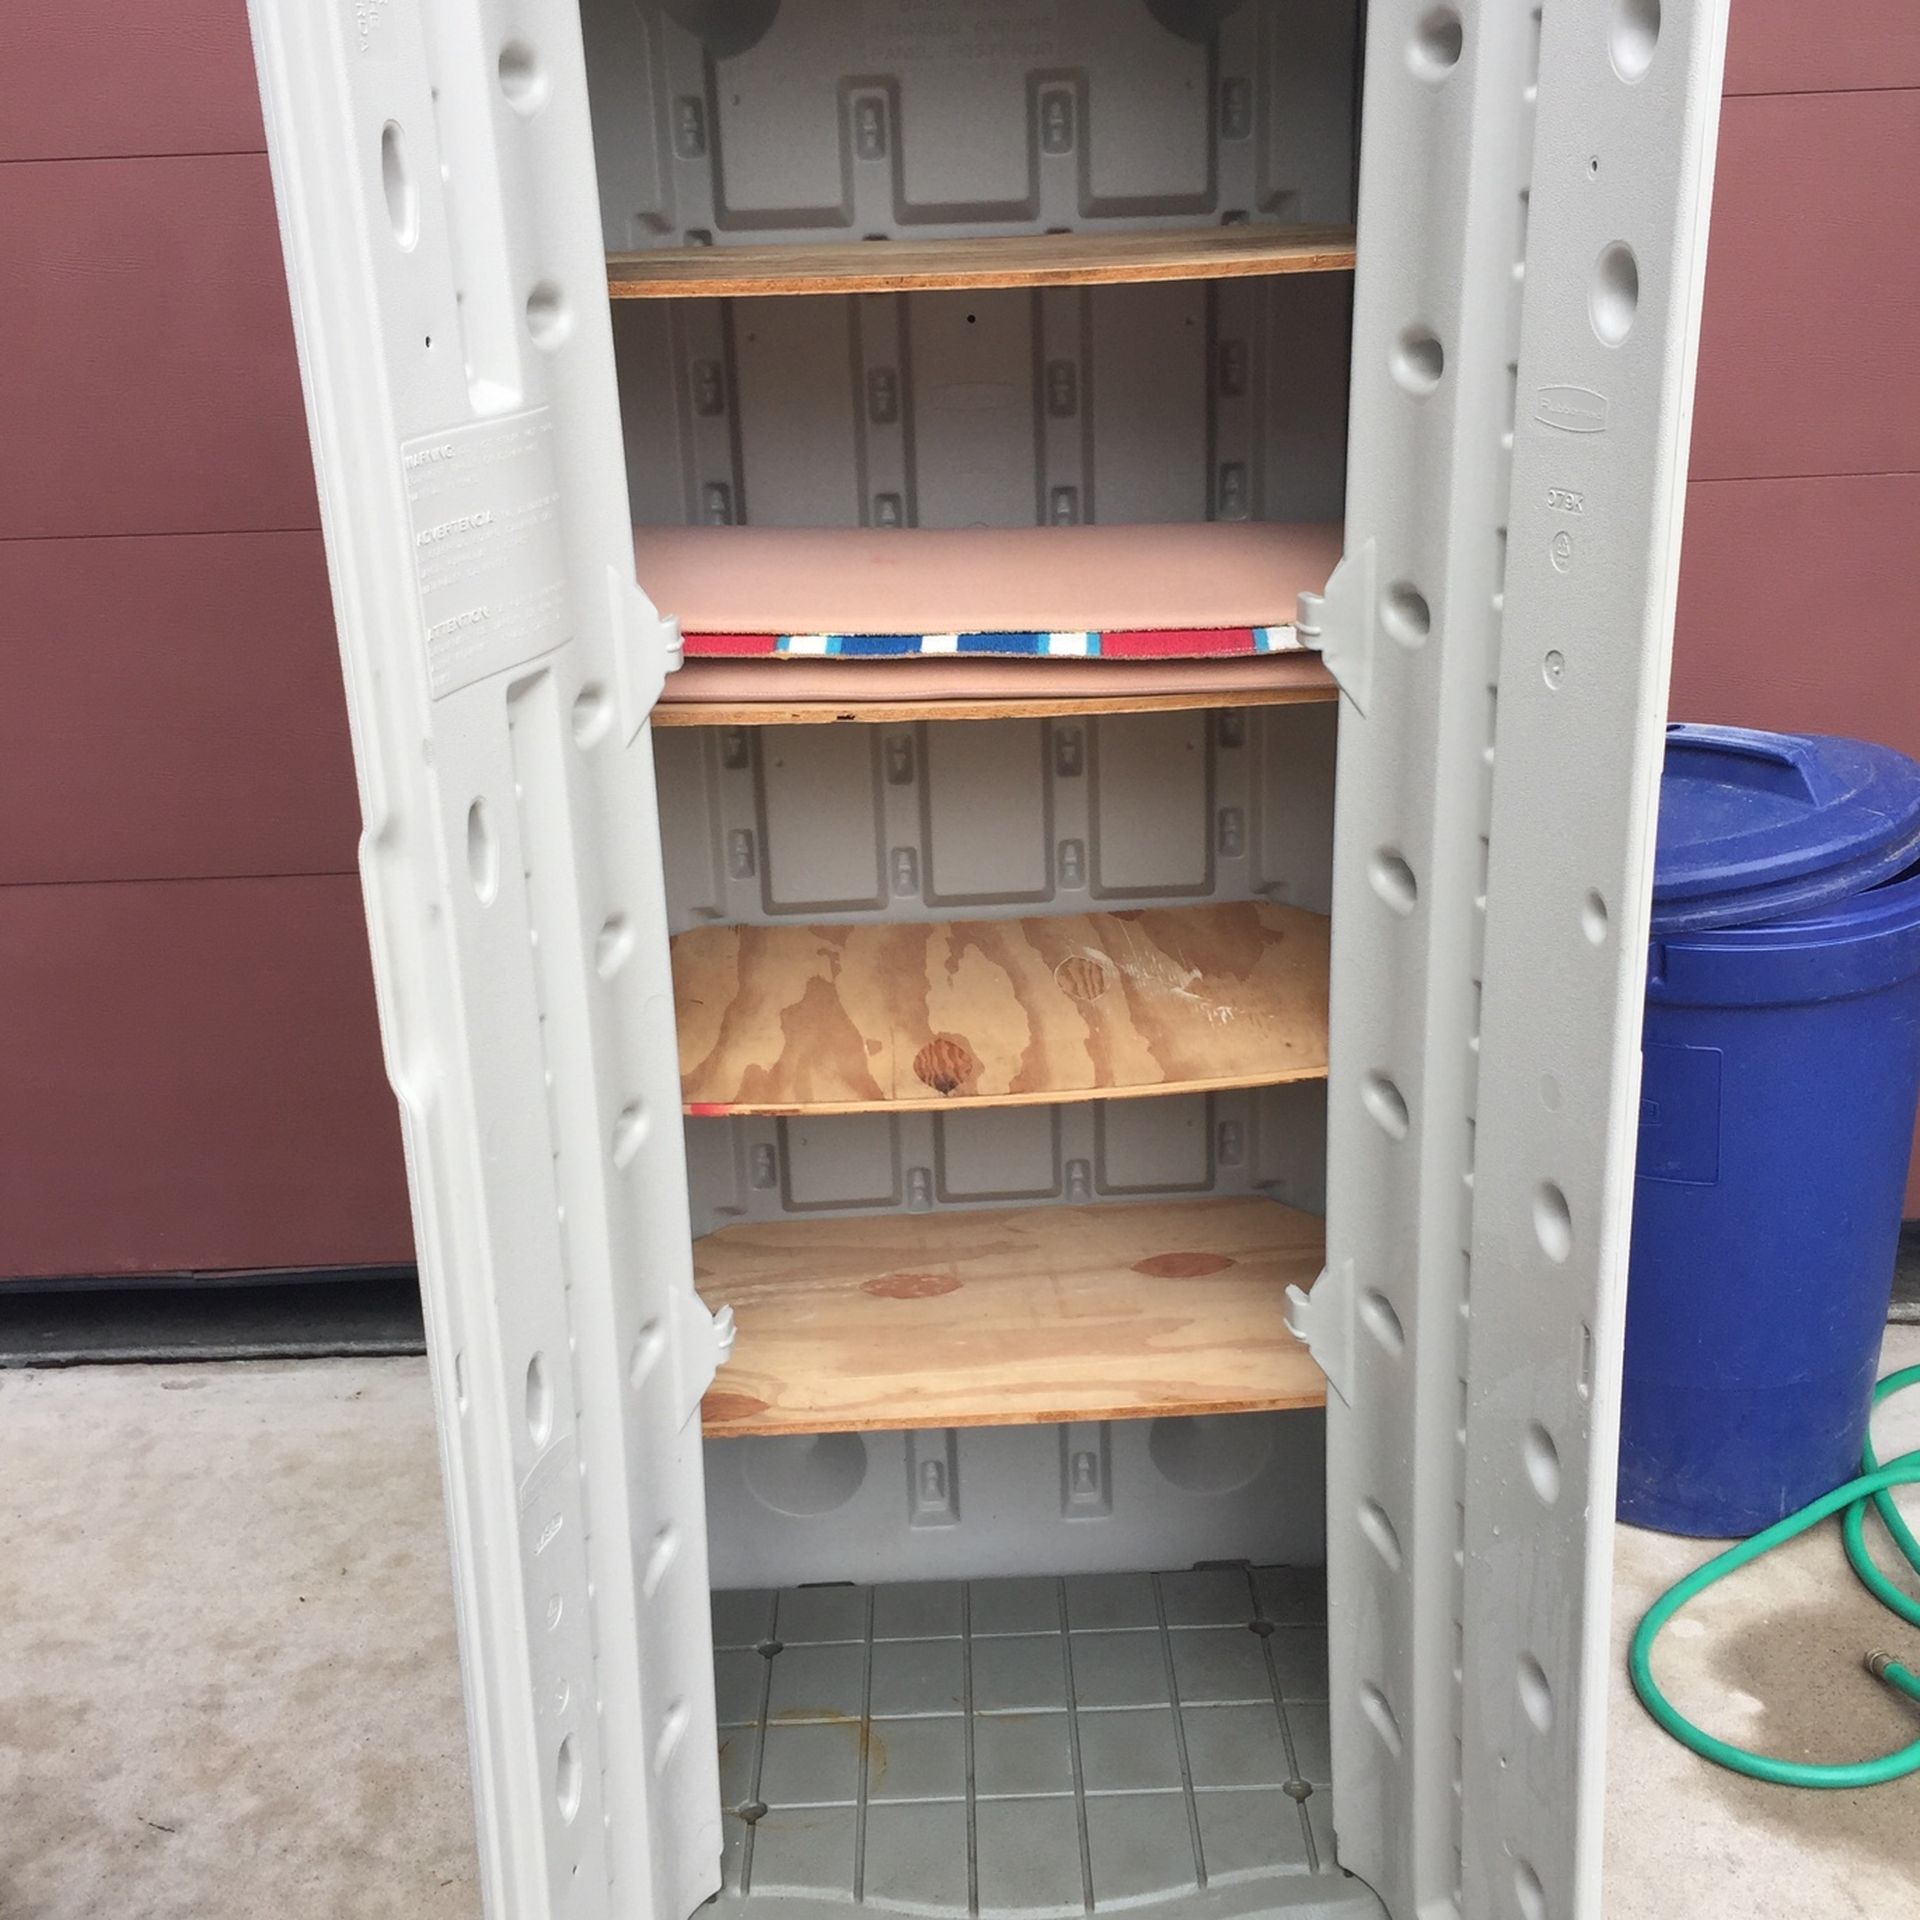 Rubbermaid Outdoor Storage Cabinet for Sale in Escondido, CA